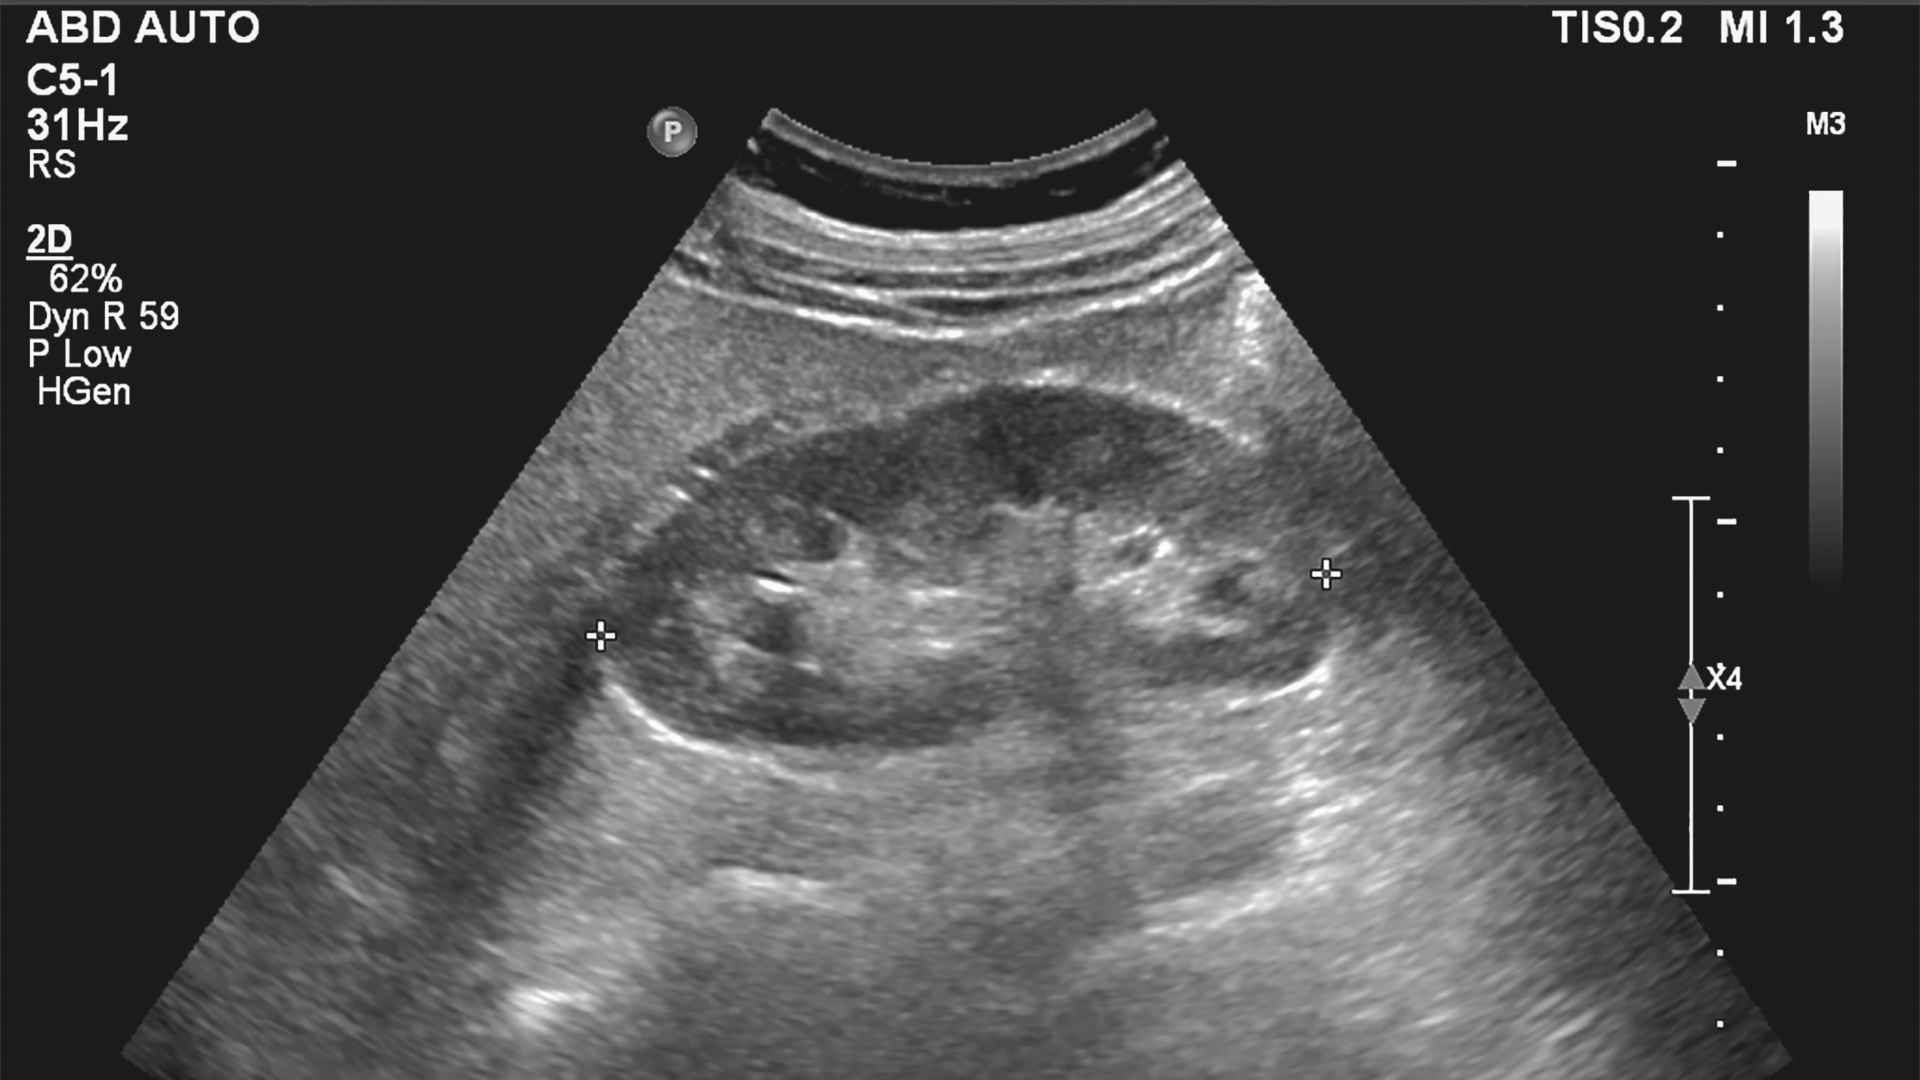 Ultrasound image of a kidney